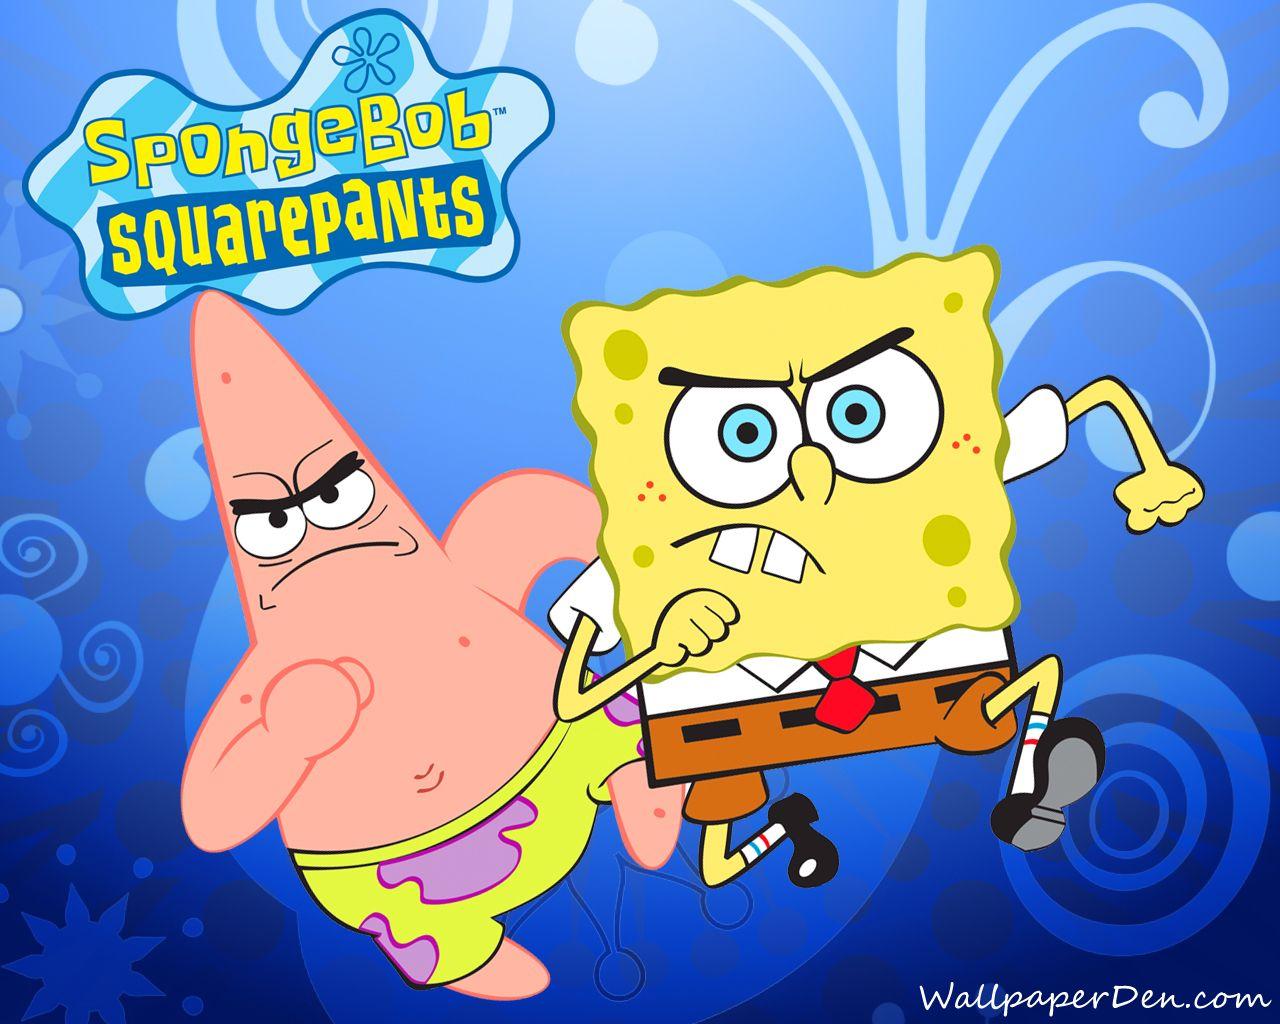 Spongebob and Patrick Wallpaper Image for iPhone 6